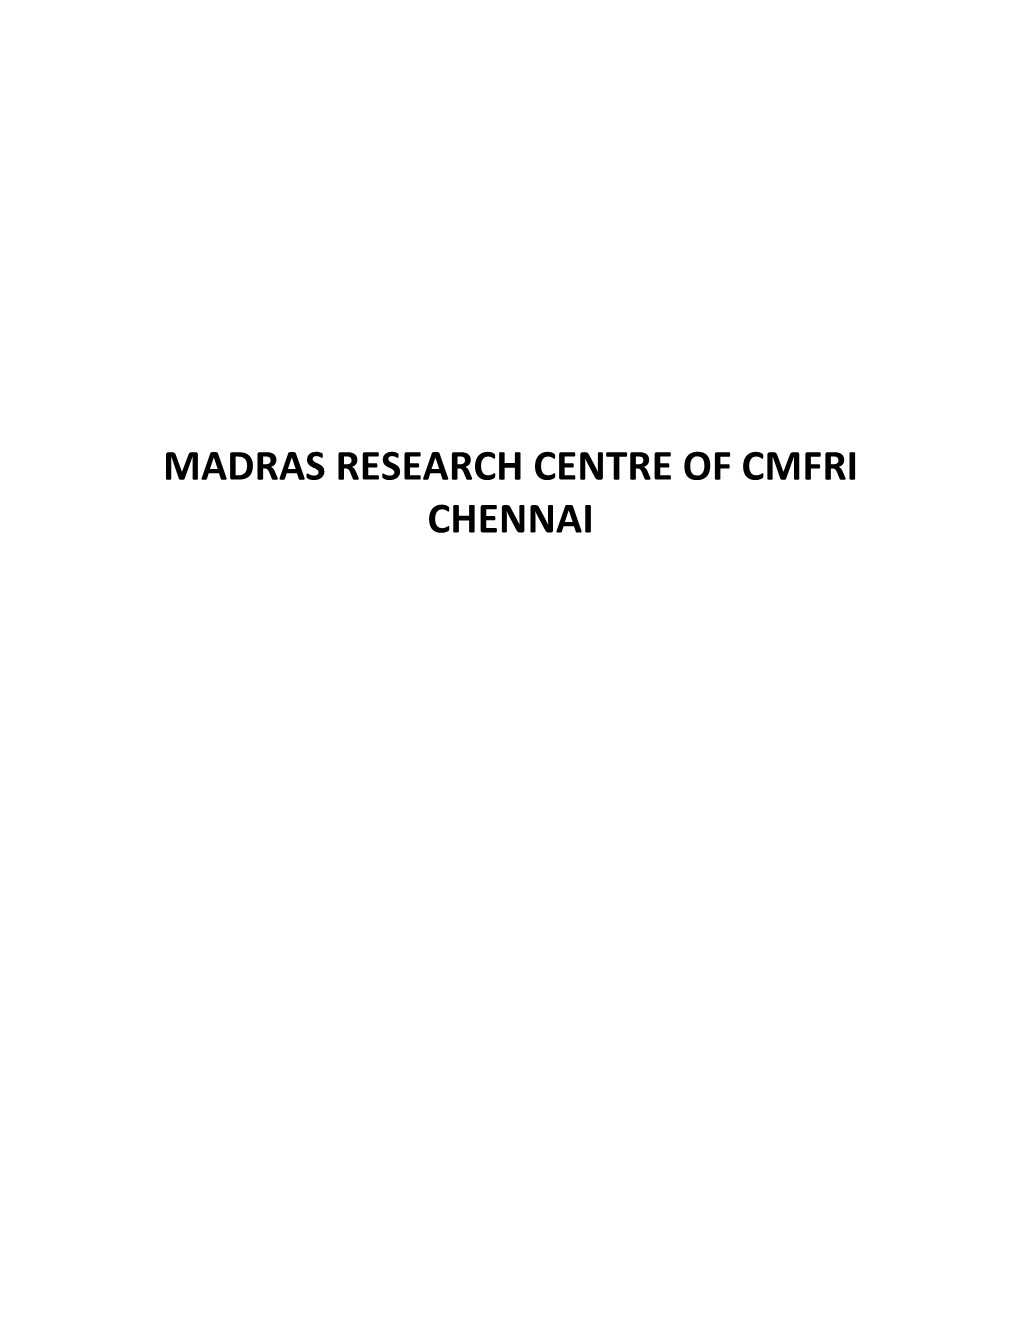 Madras Research Centre of Cmfri Chennai